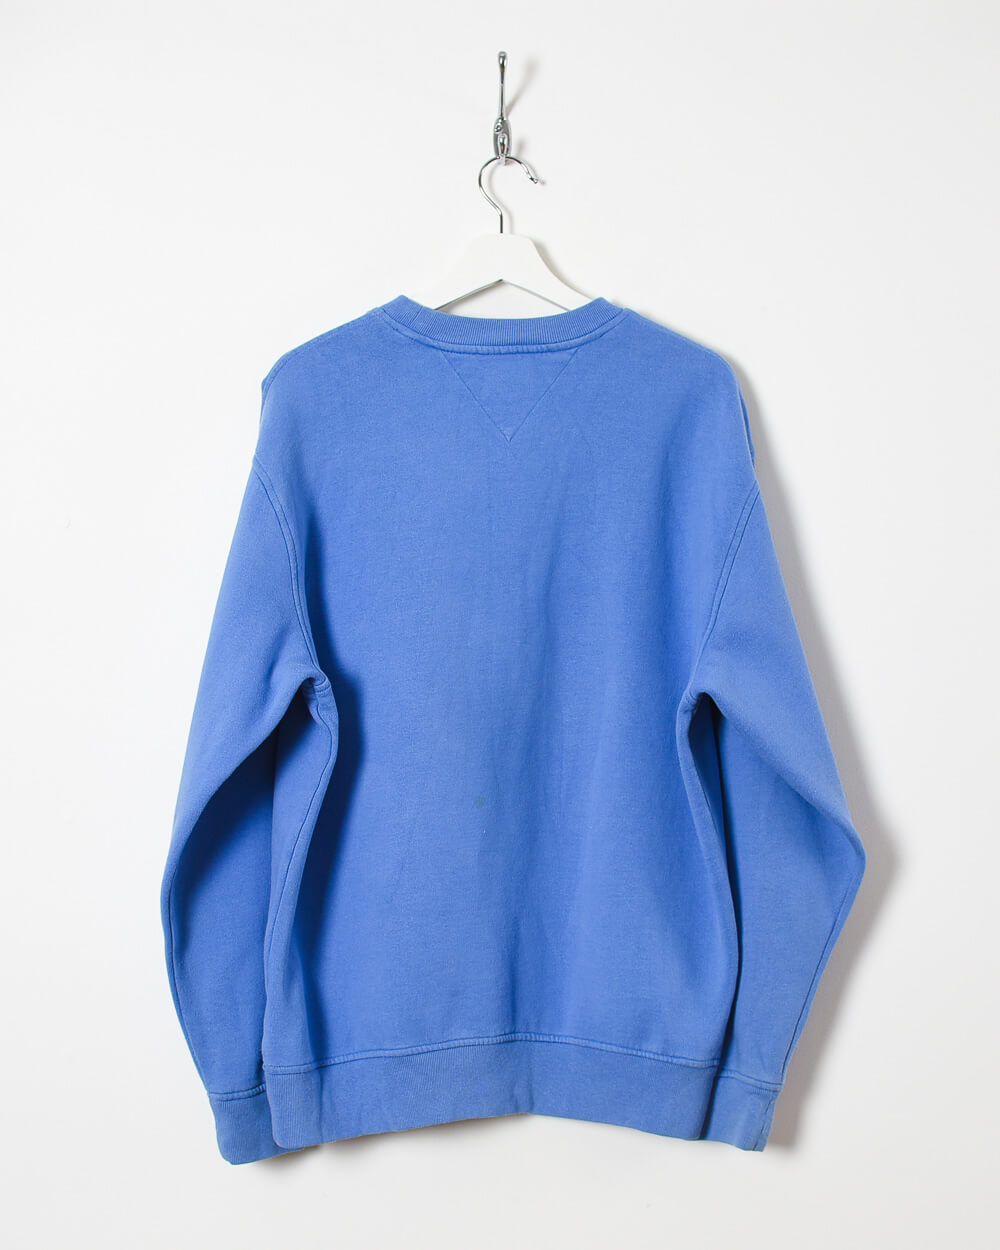 Tommy Hilfiger Sweatshirt - Medium - Domno Vintage 90s, 80s, 00s Retro and Vintage Clothing 